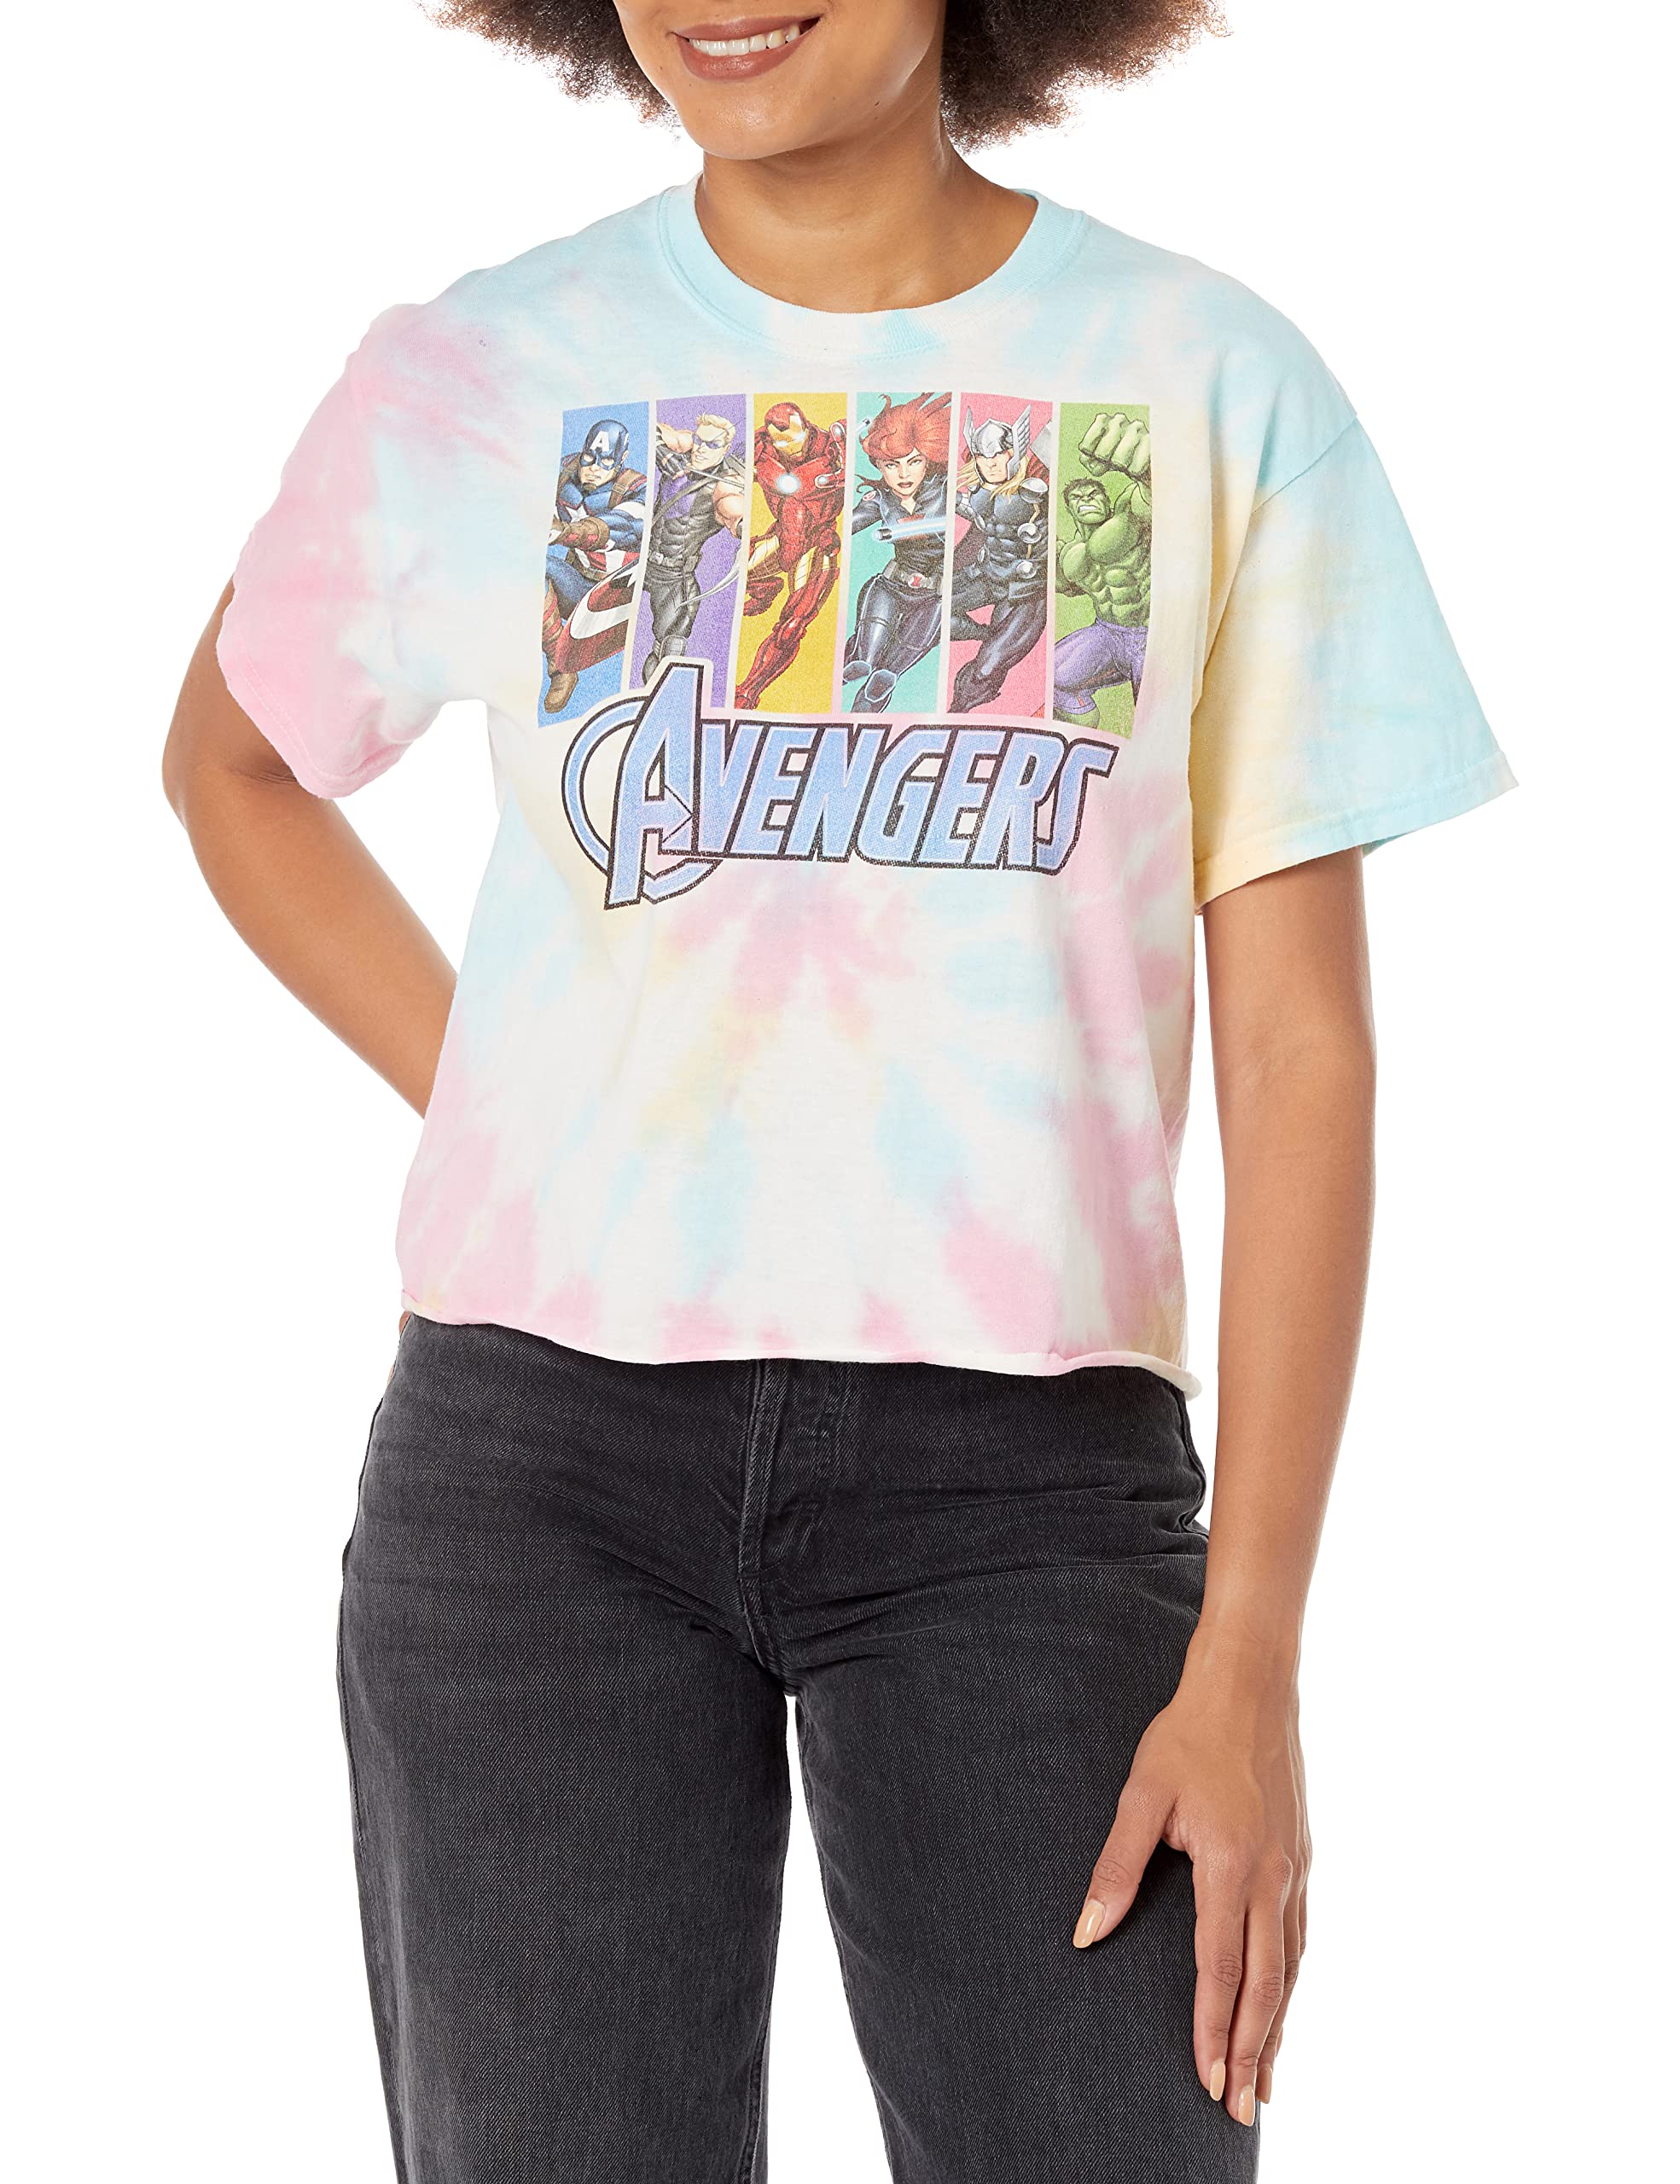 Marvel Universe Avengers Unite Women's Fast Fashion Short Sleeve Tee Shirt